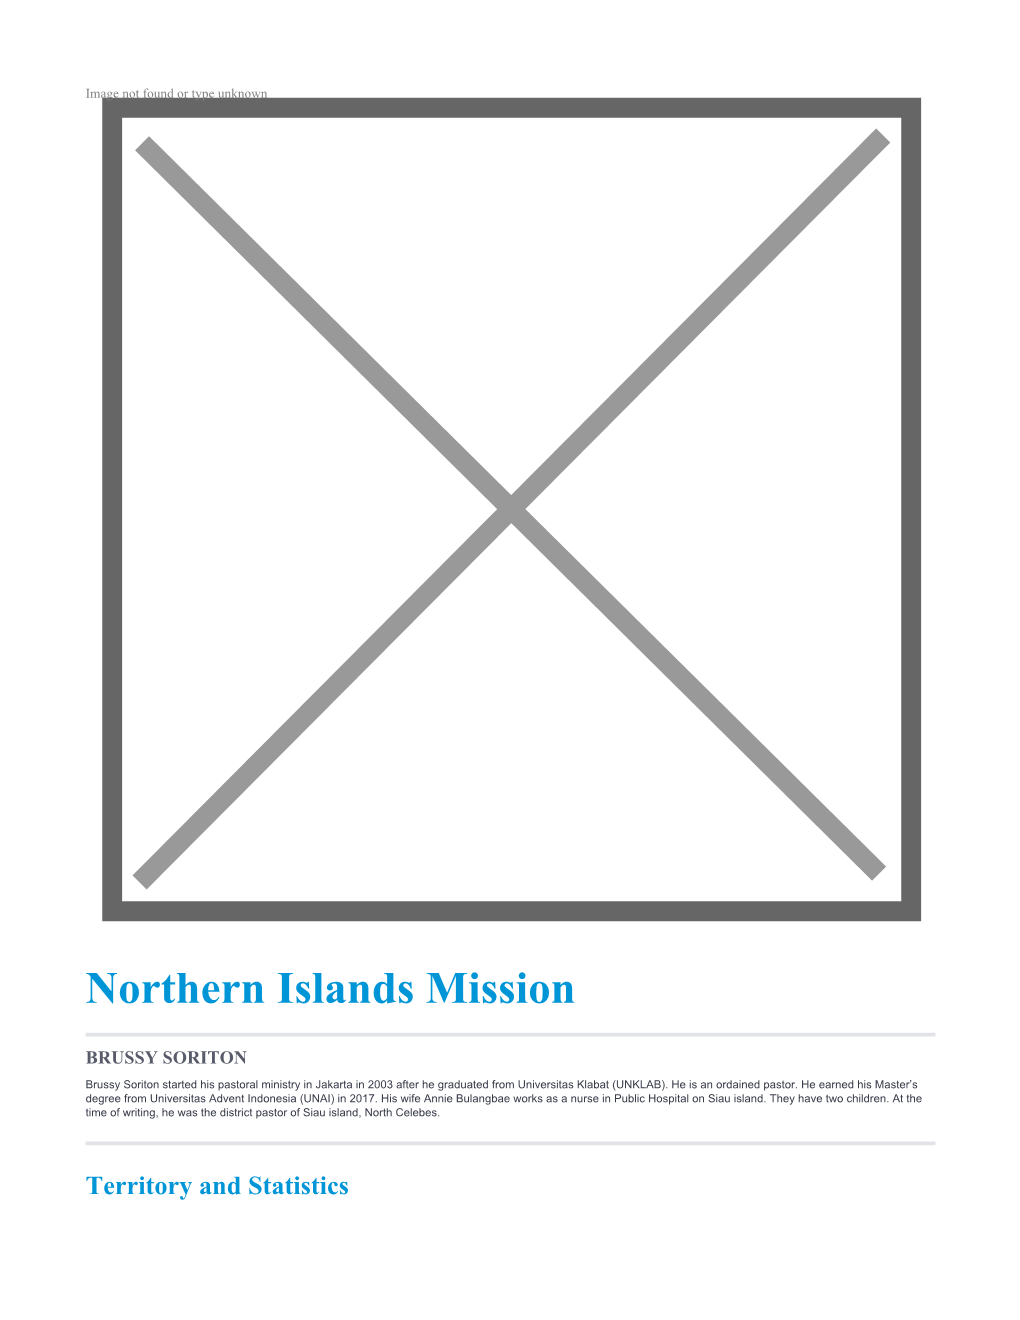 Northern Islands Mission